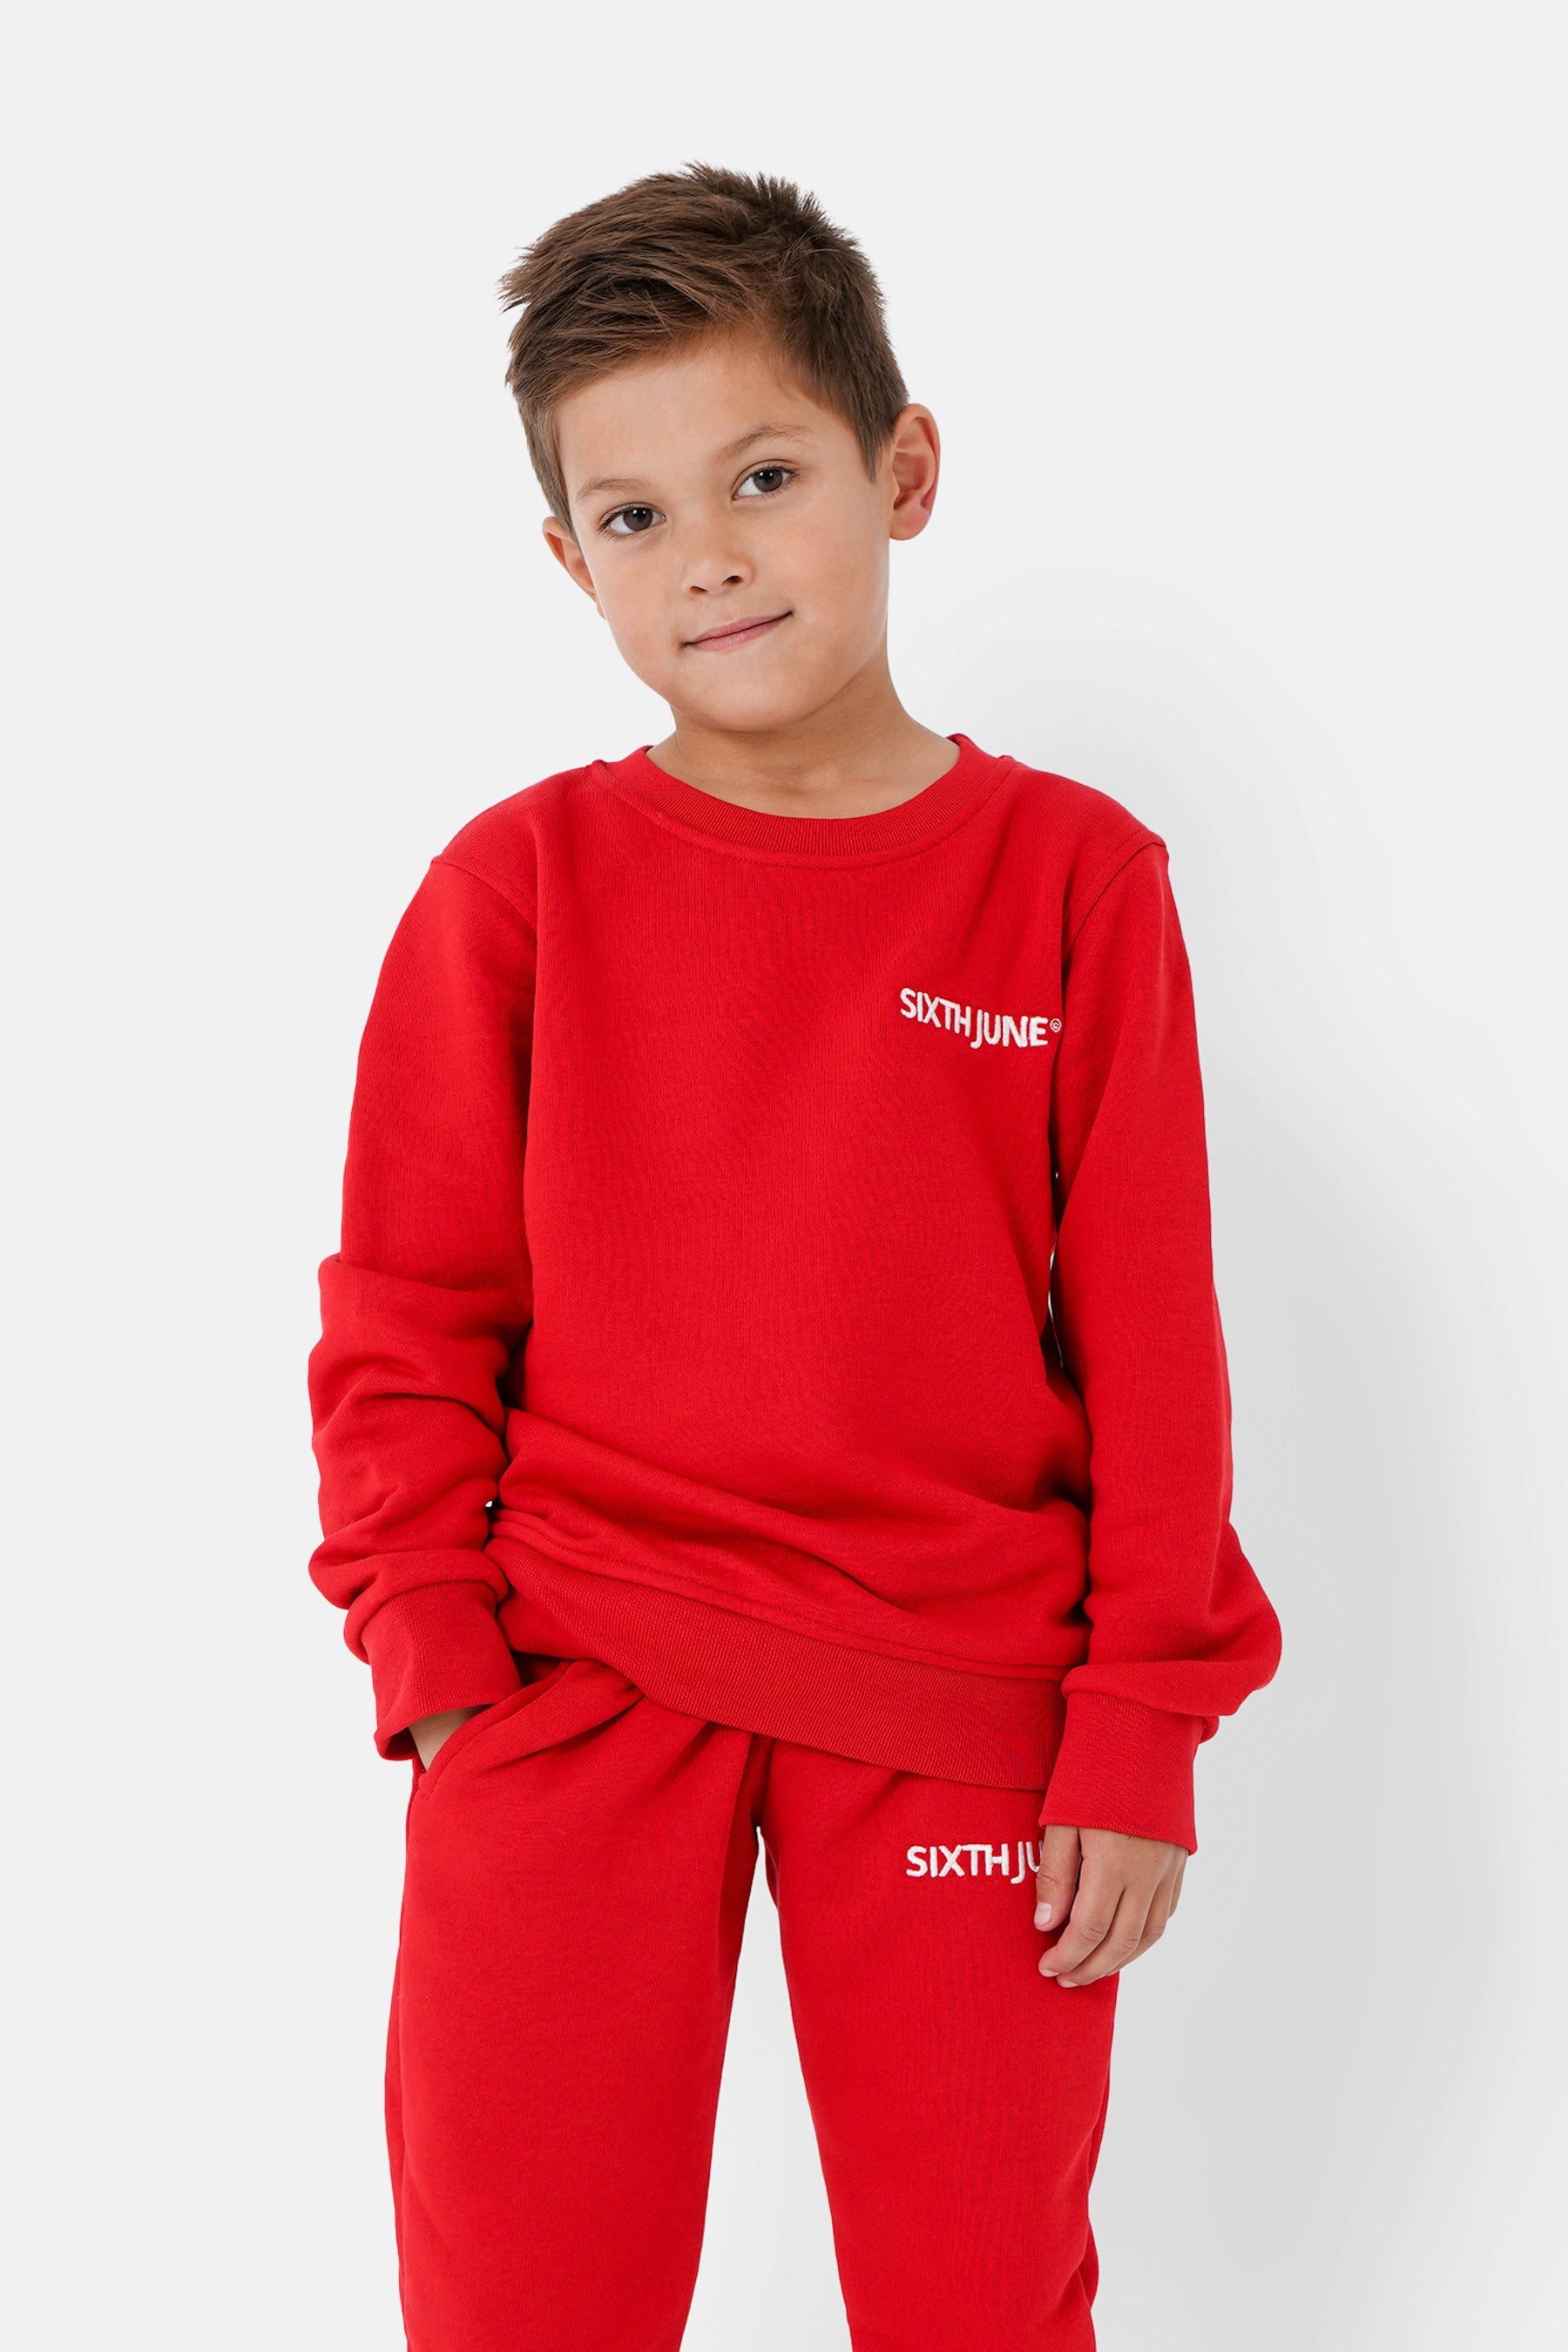 Sixth June - Sweatshirt soft logo brodé junior Rouge